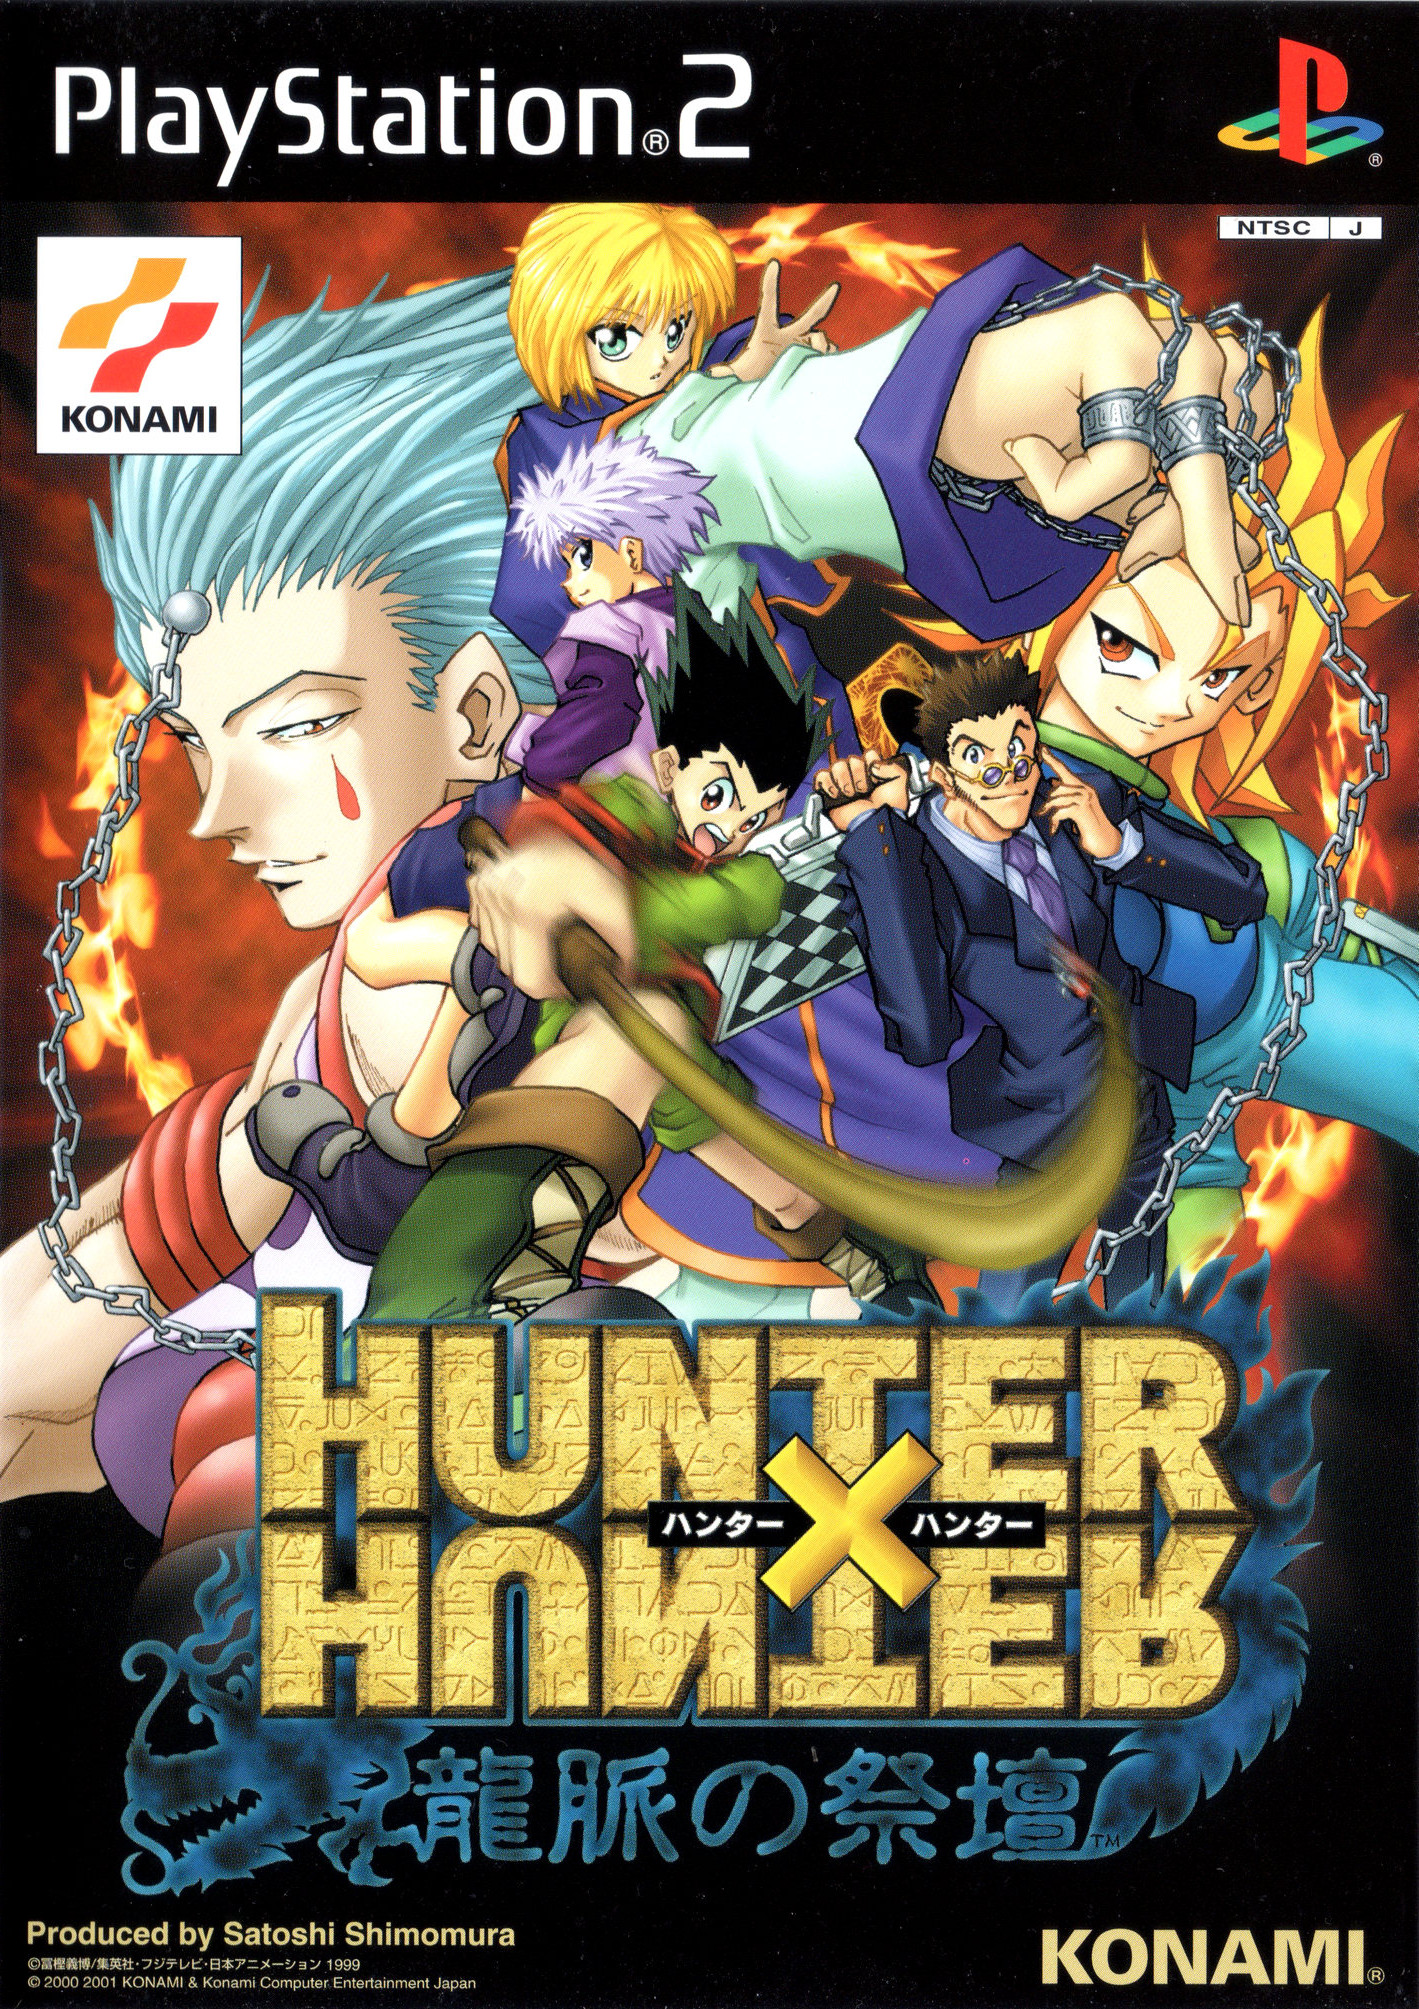 Hunter x Hunter RPG, Hunter X Hunter